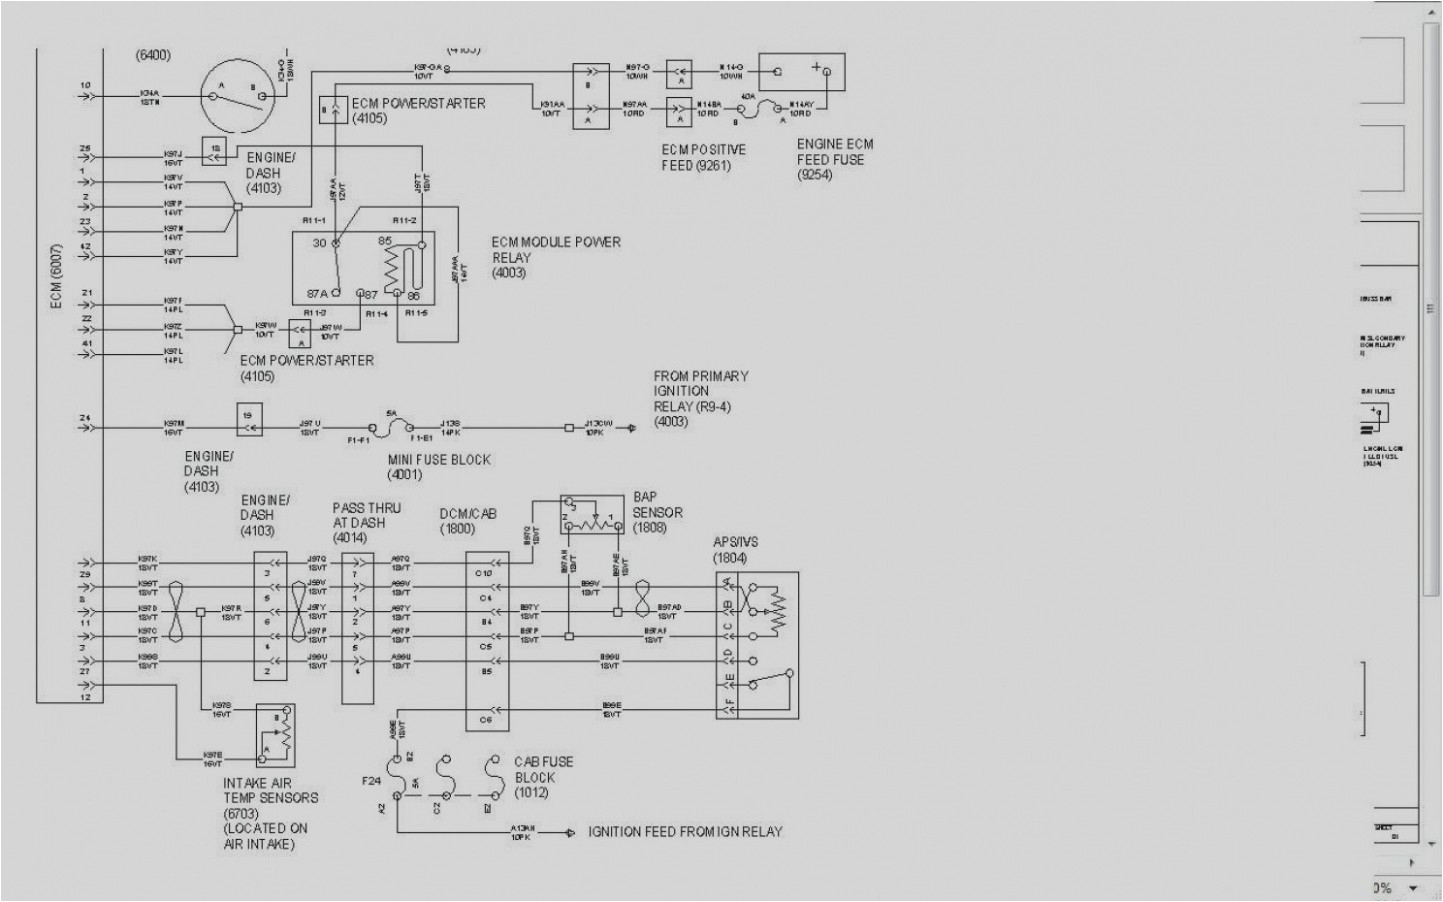 dt7 fuse box go wiring diagram dt466 engine not working image jpg